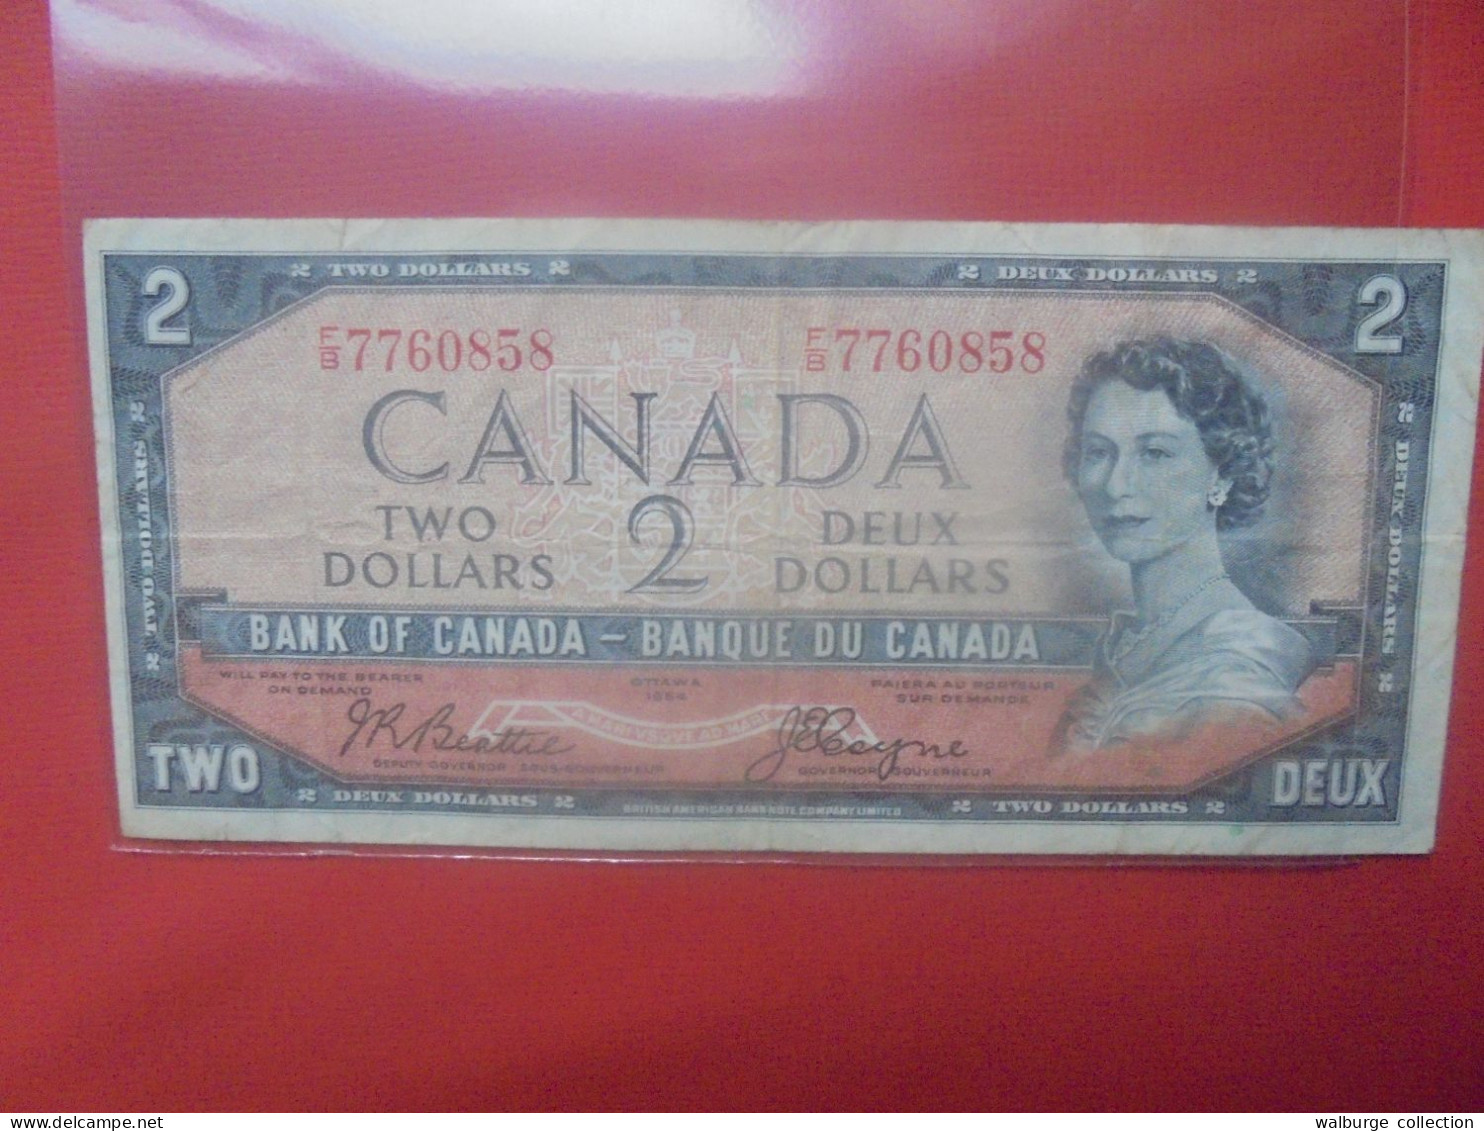 CANADA 2$ 1954 Signature Beattie-Coyne Circuler (B.29) - Canada